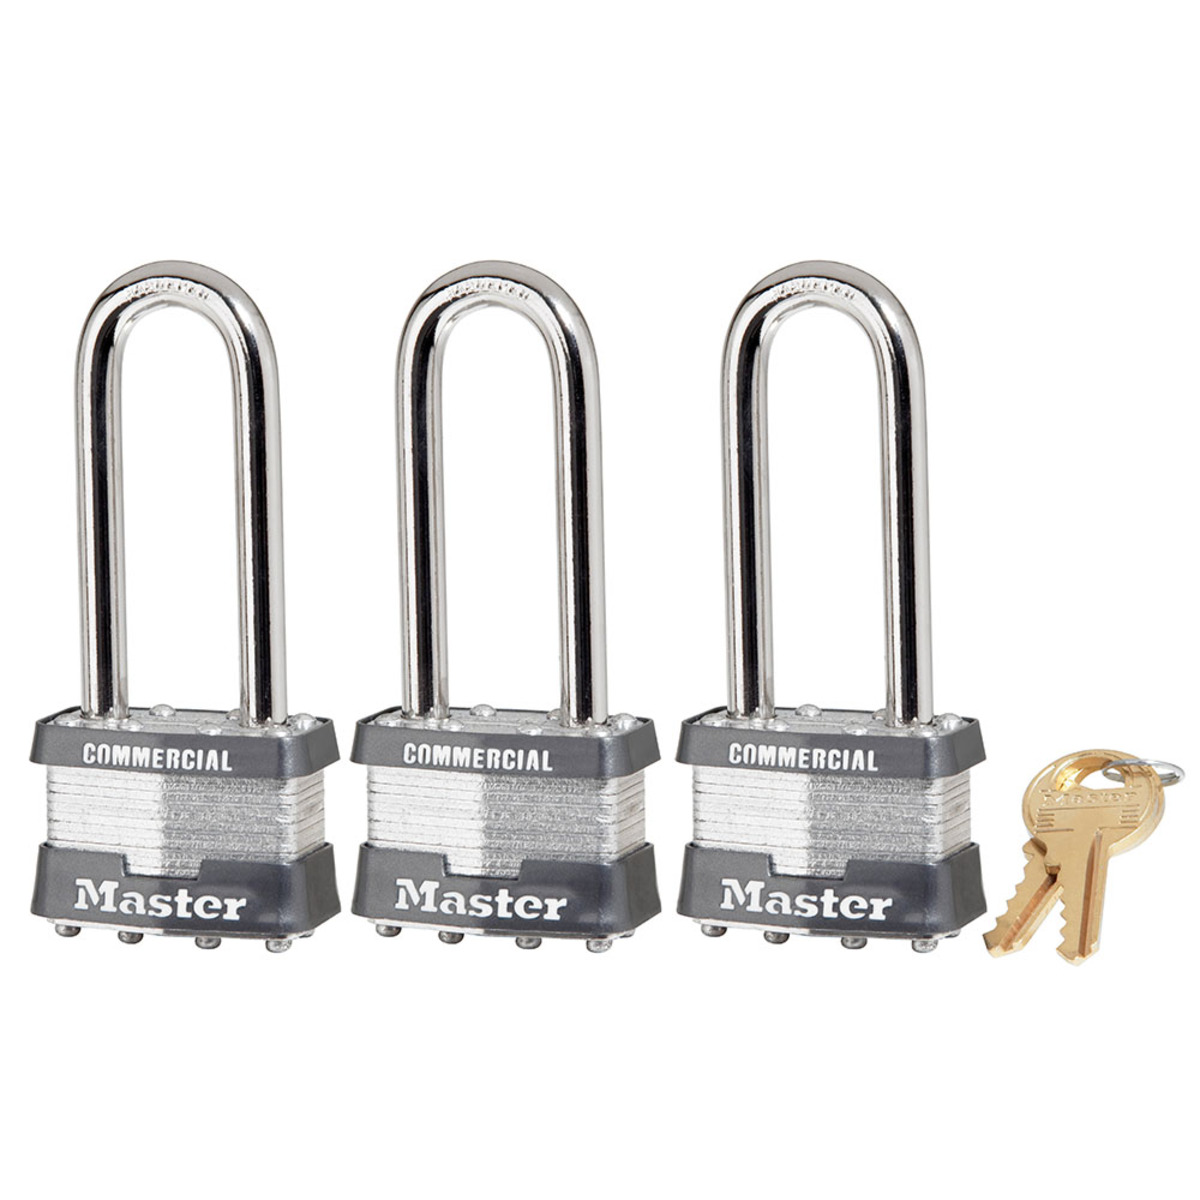 Master Lock No 1 Commercial w 2 Keys “Hardened” 